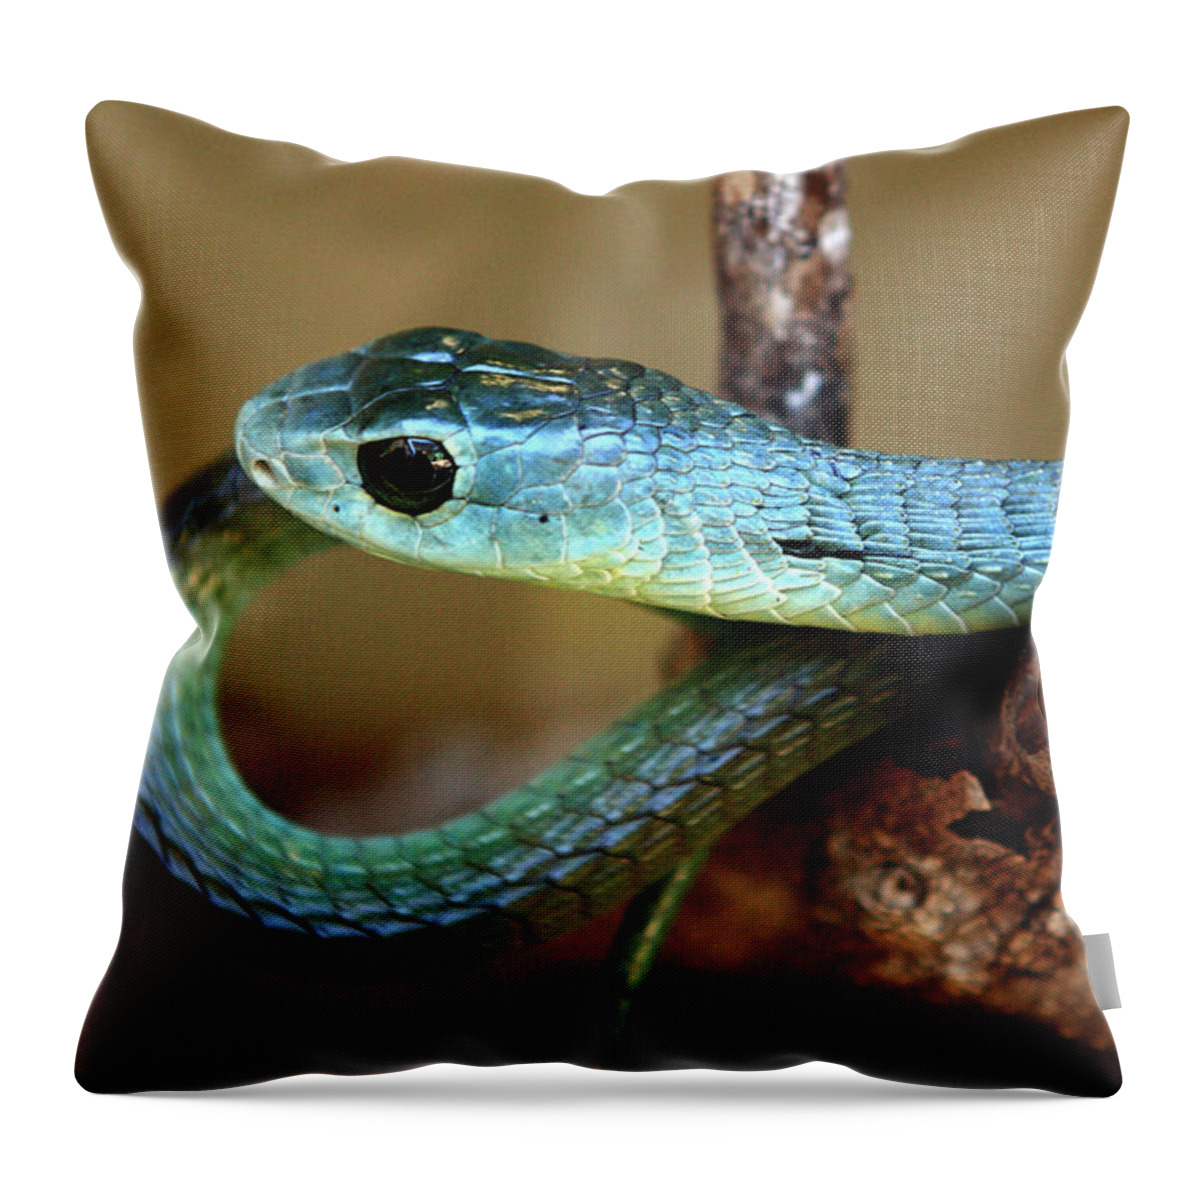 Snakes Throw Pillow featuring the photograph Boomslang #2 by Aidan Moran